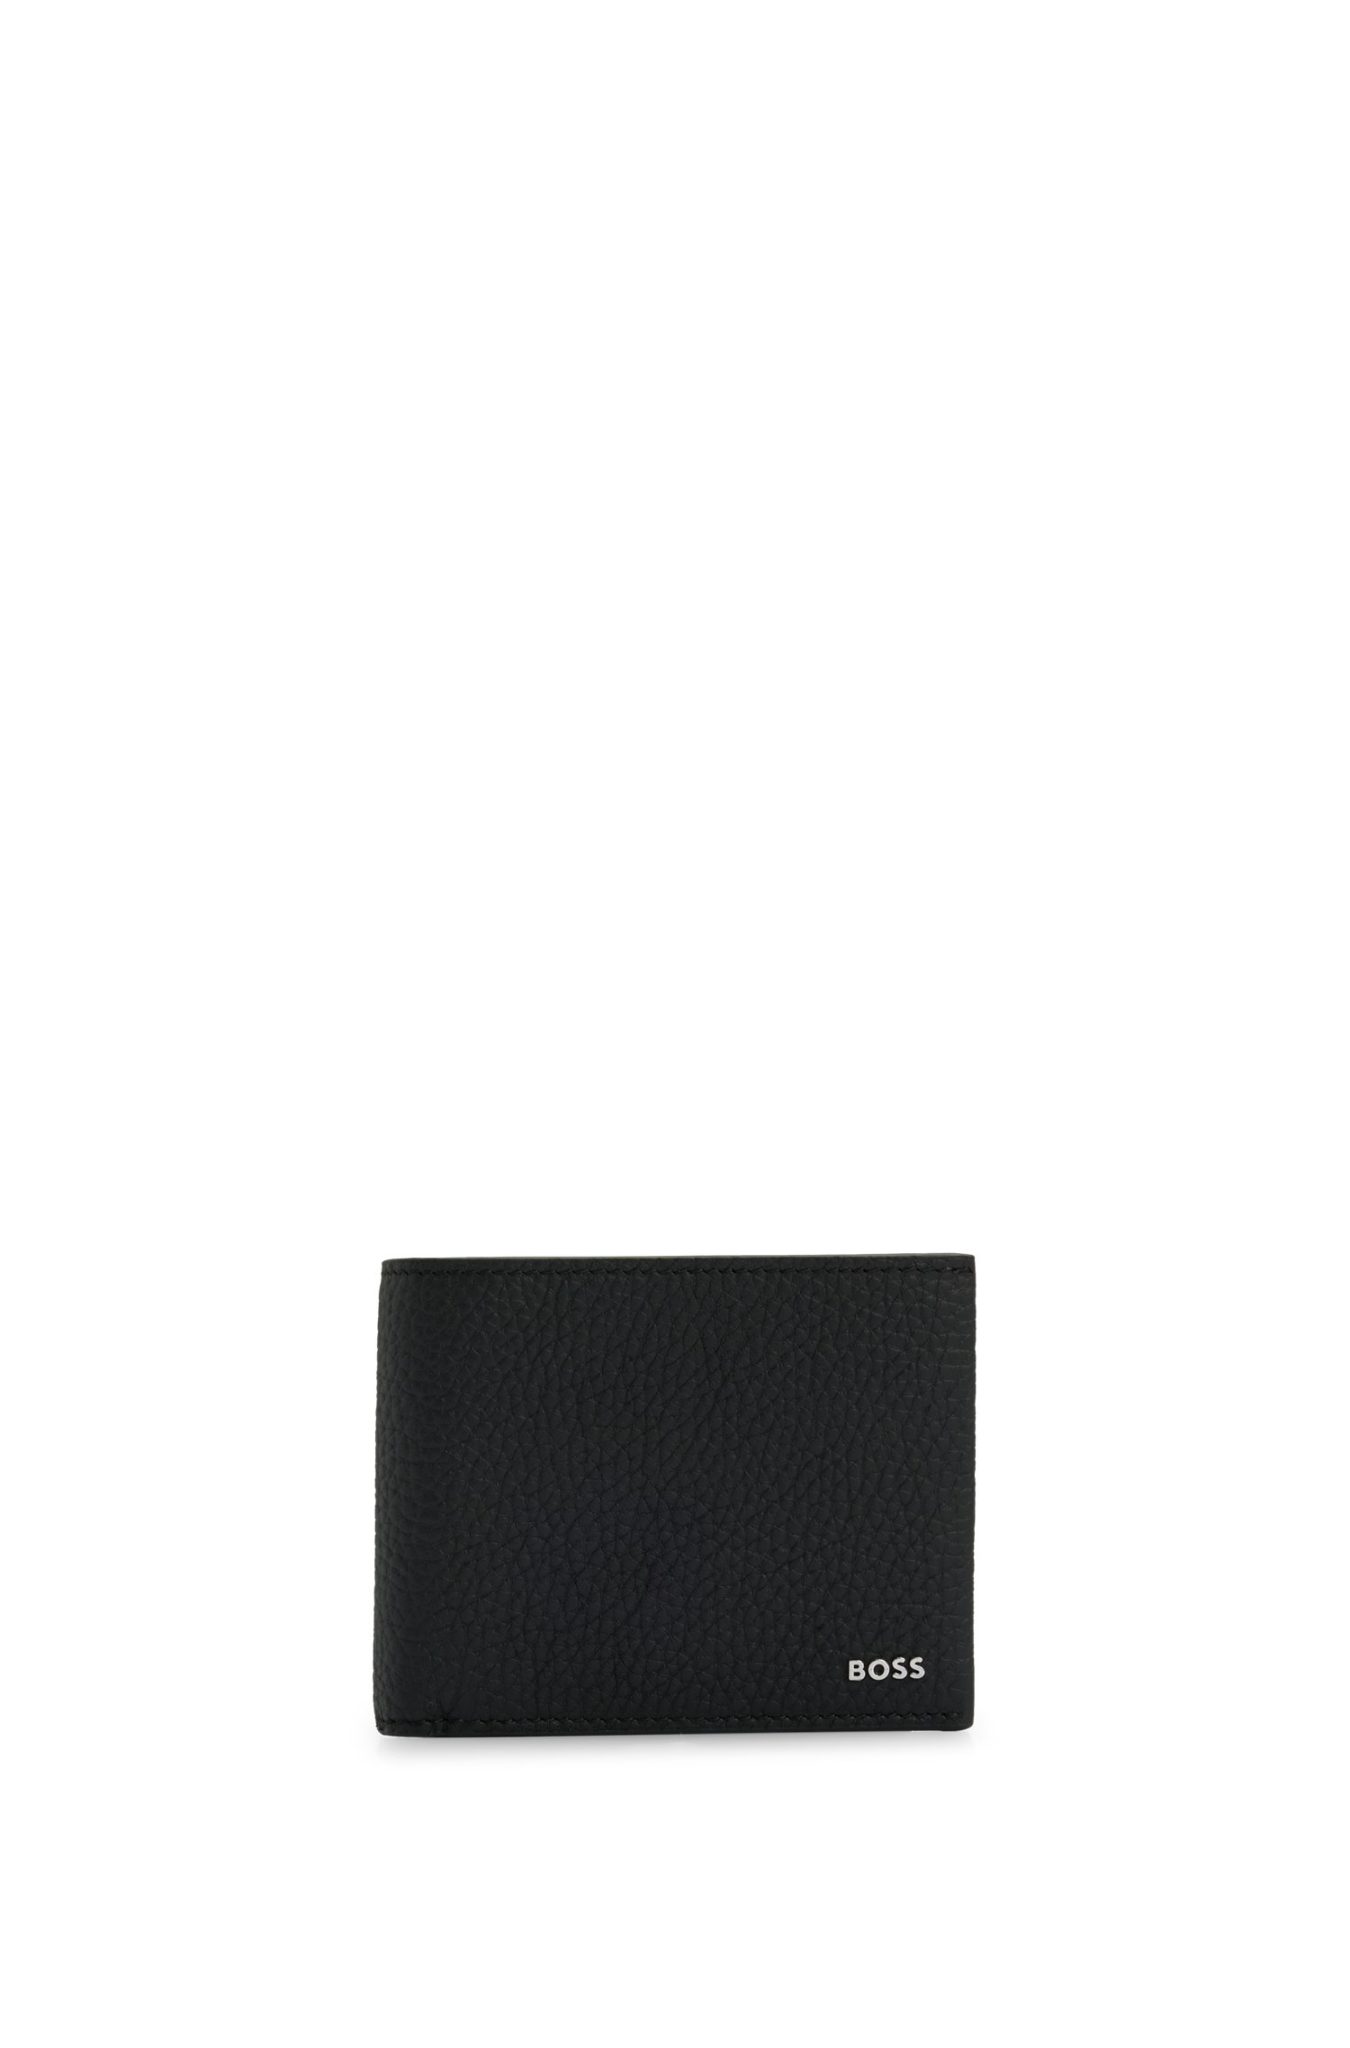 Hugo Boss Portefeuille en cuir italien avec logo argenté poli